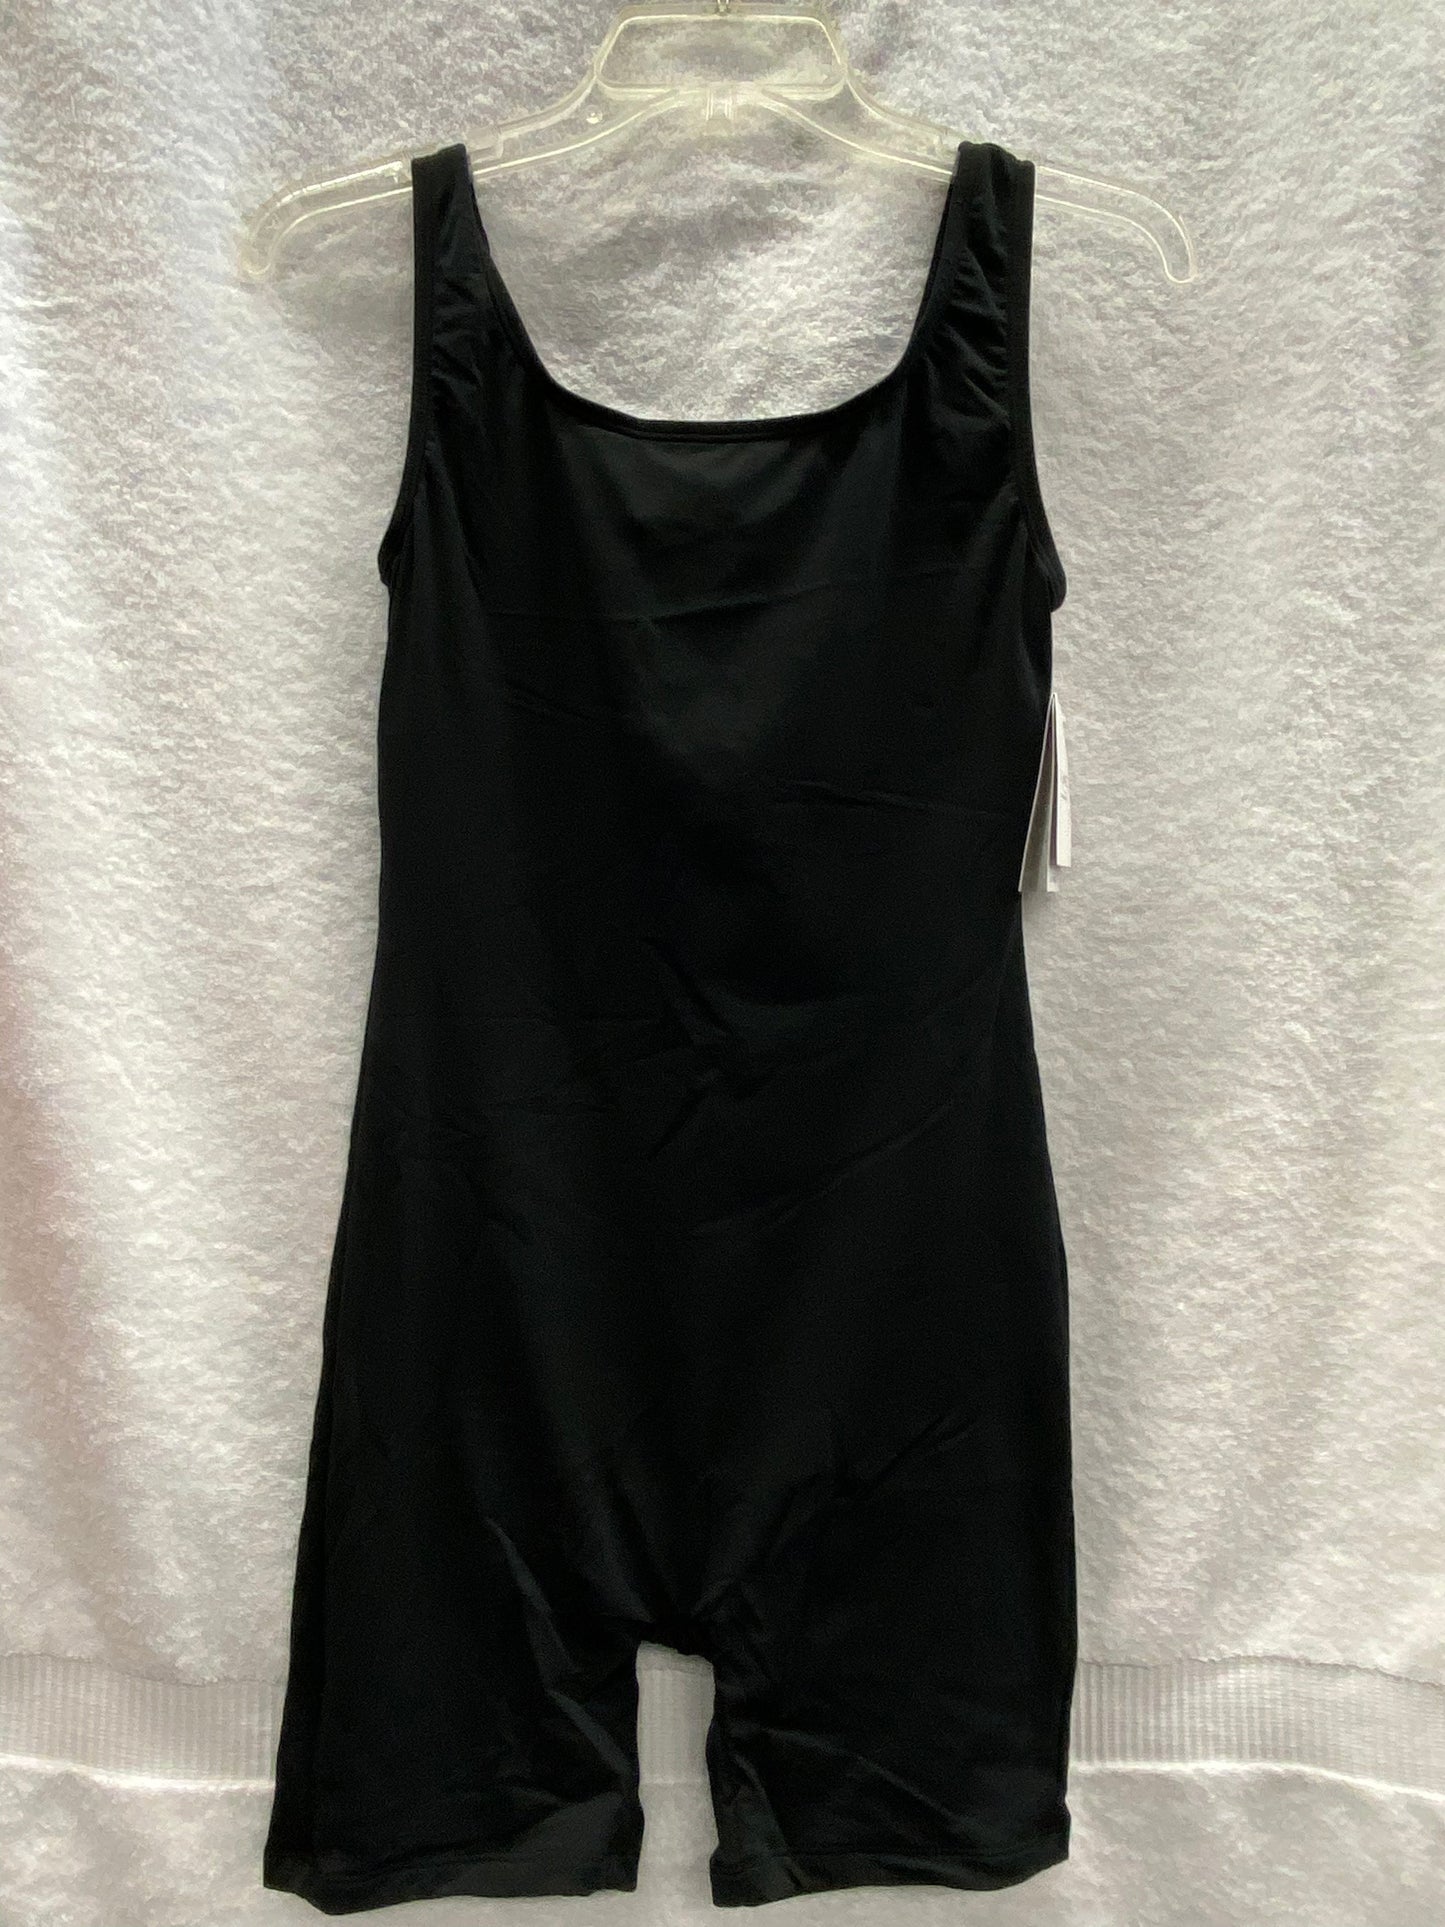 Dolfin Black Aquatic Fitness Instructor Suit Size 8